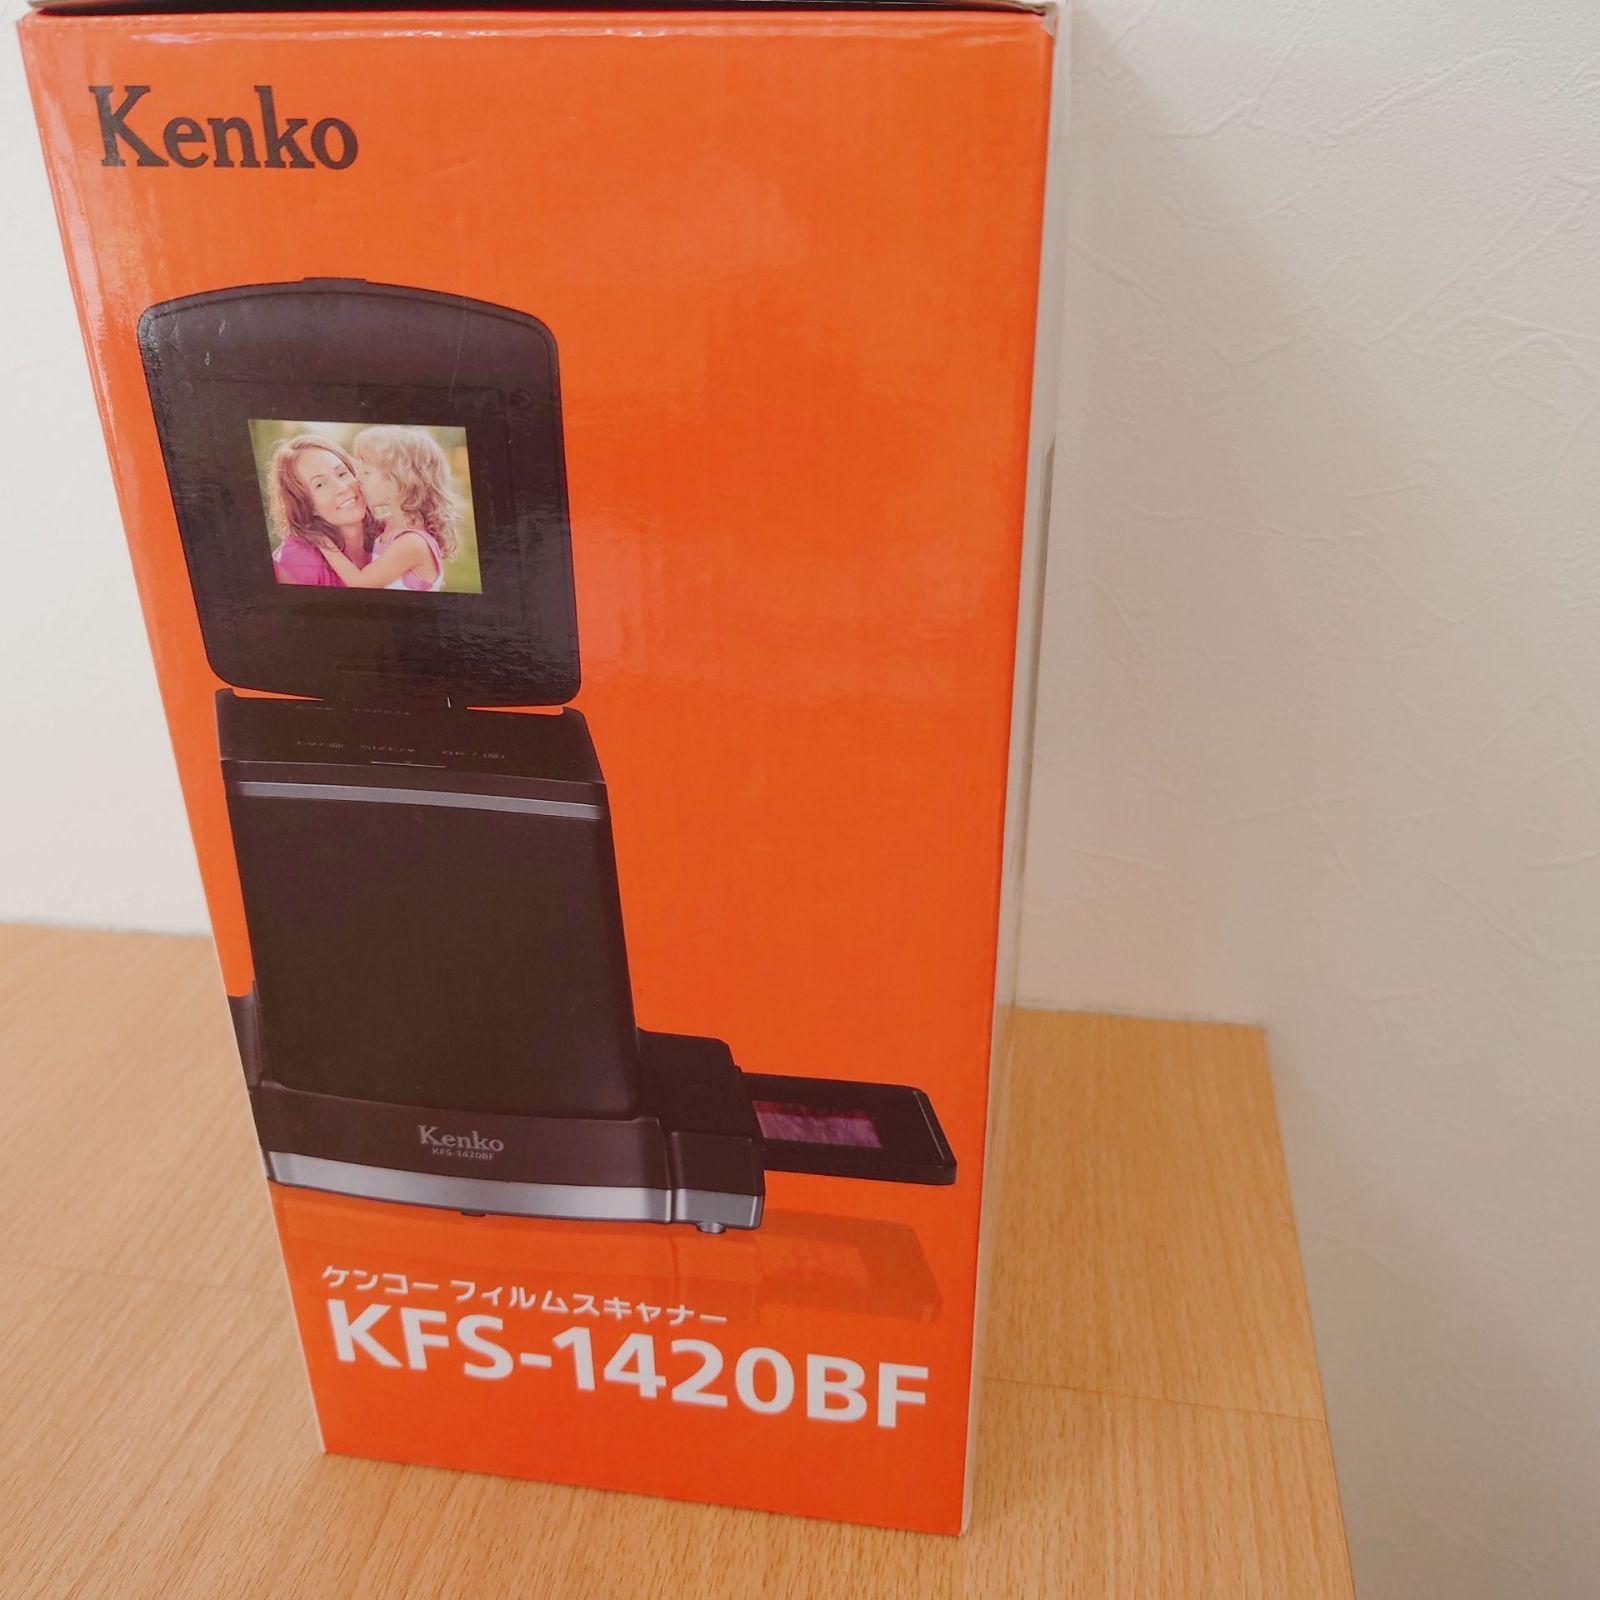 Kenko KFS-1420BF フィルムスキャナー - メルカリ